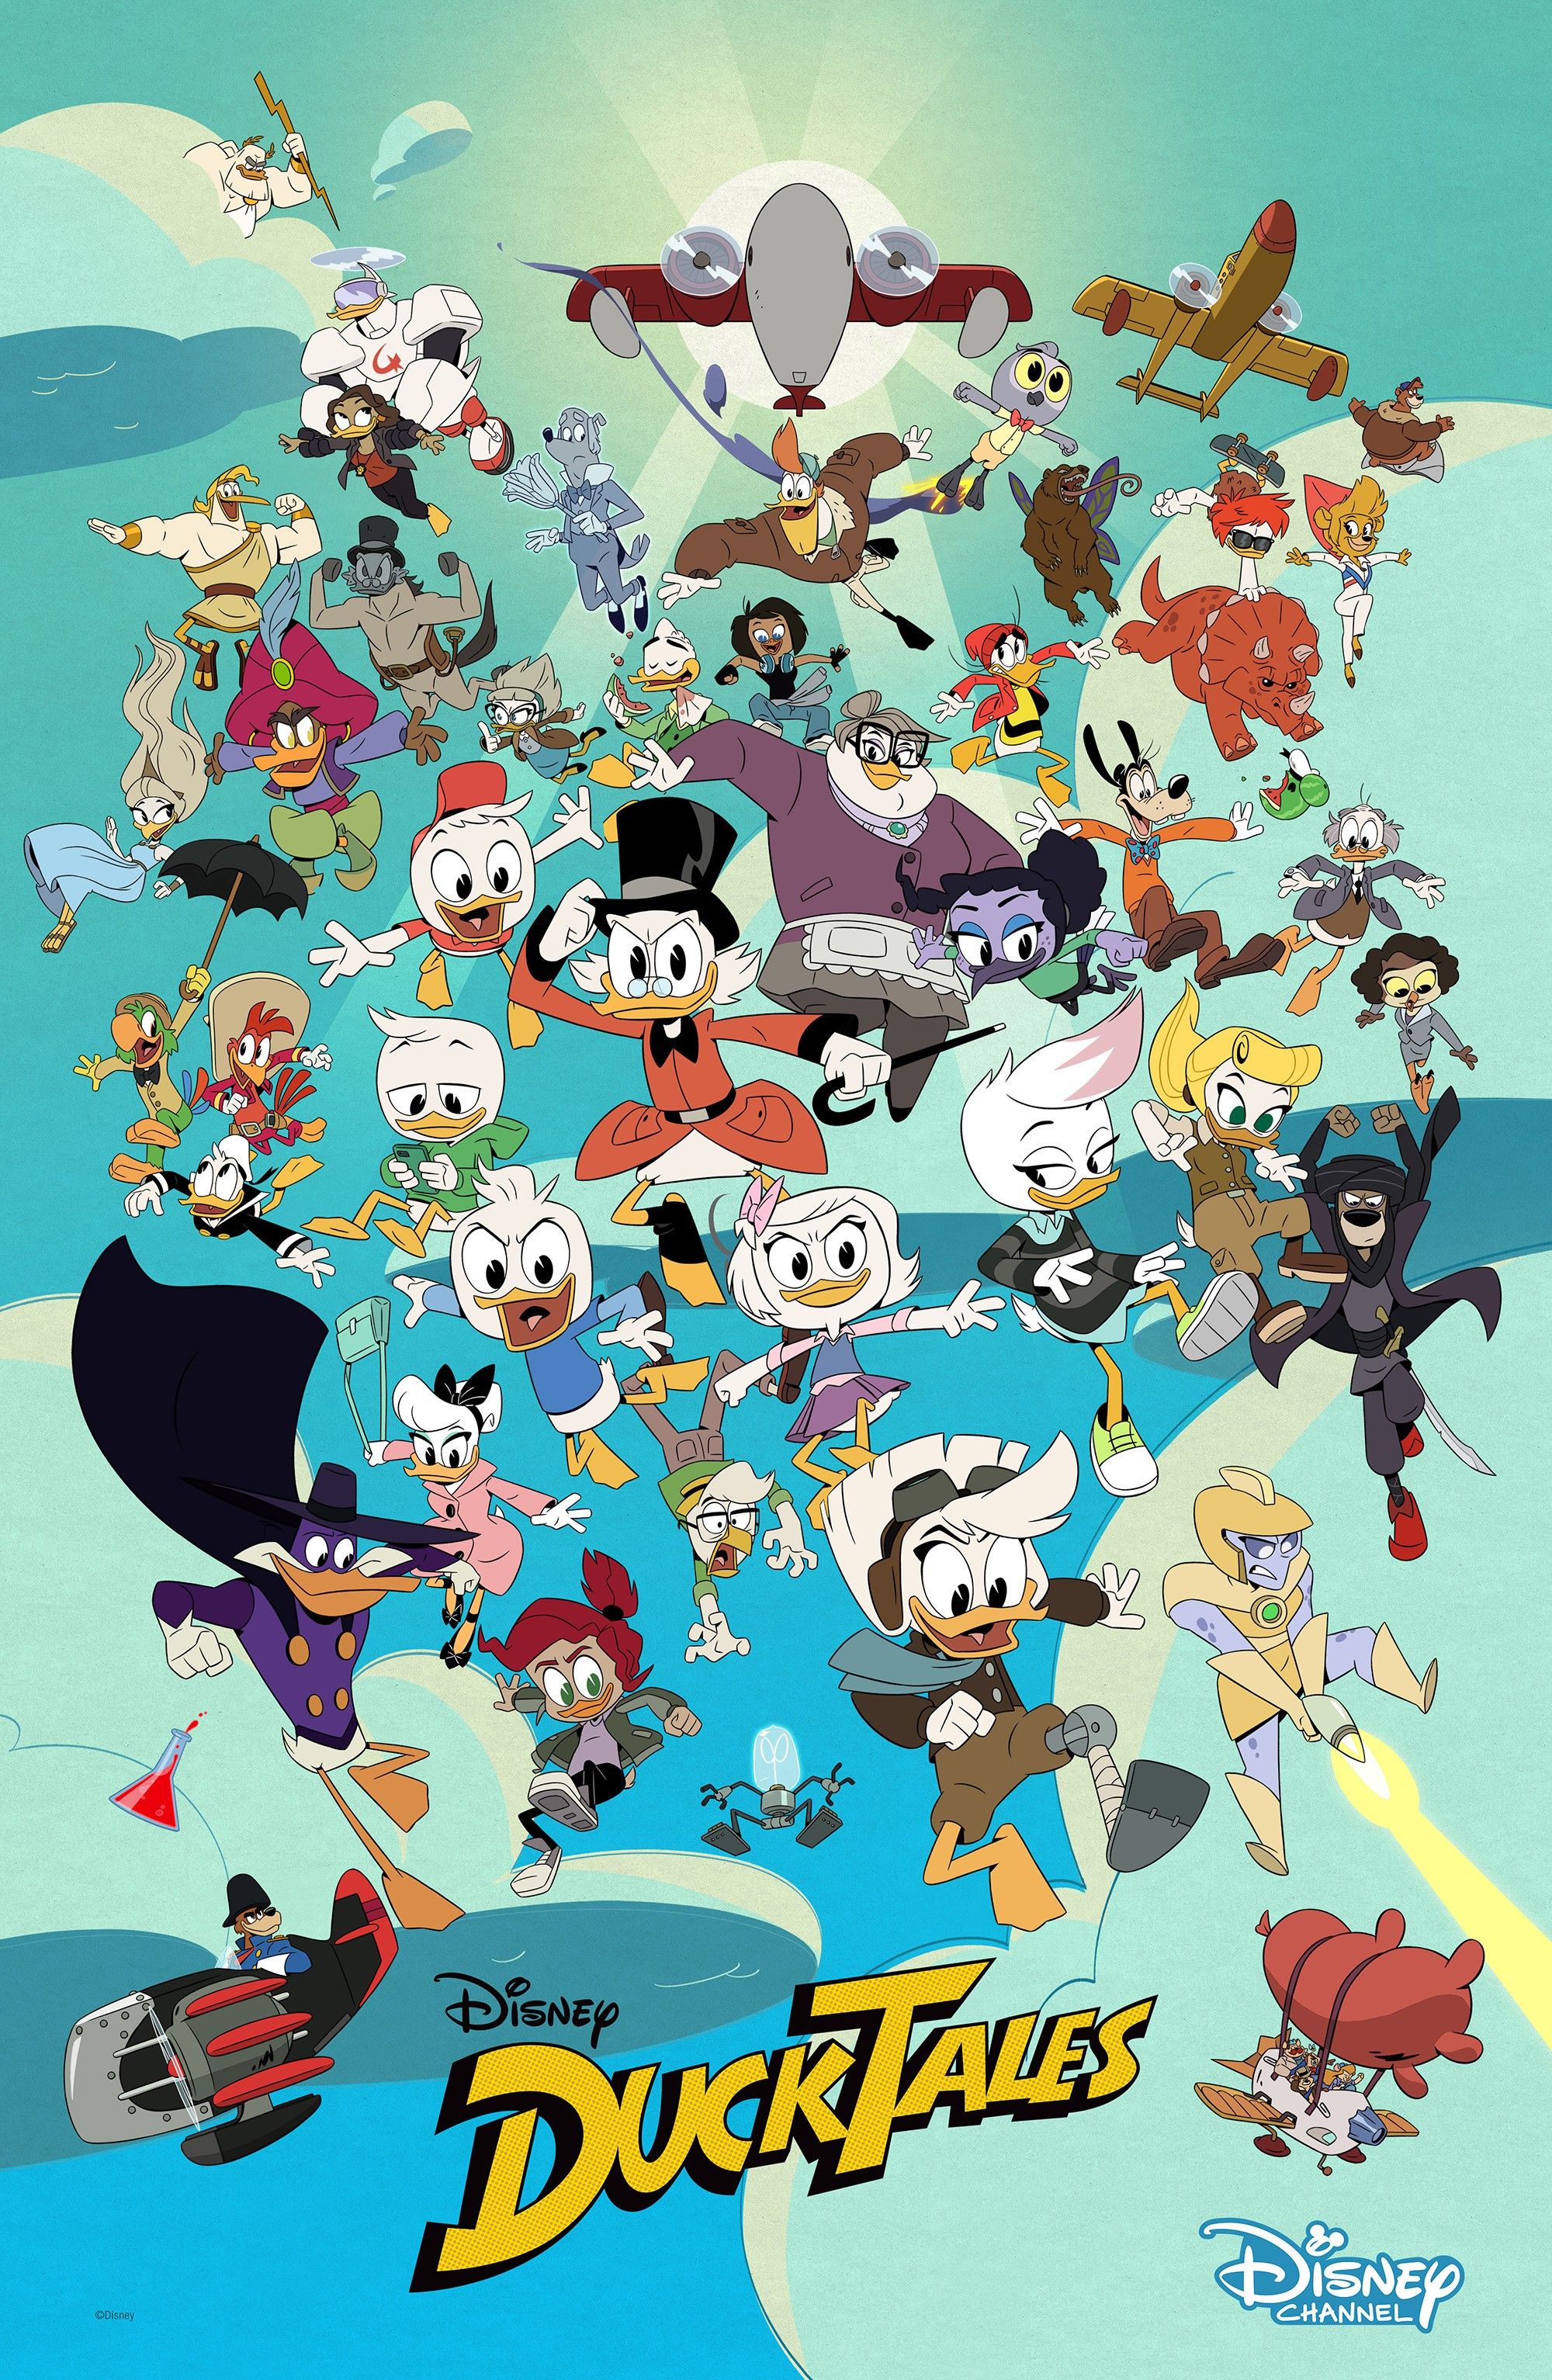 DuckTales season 2 poster